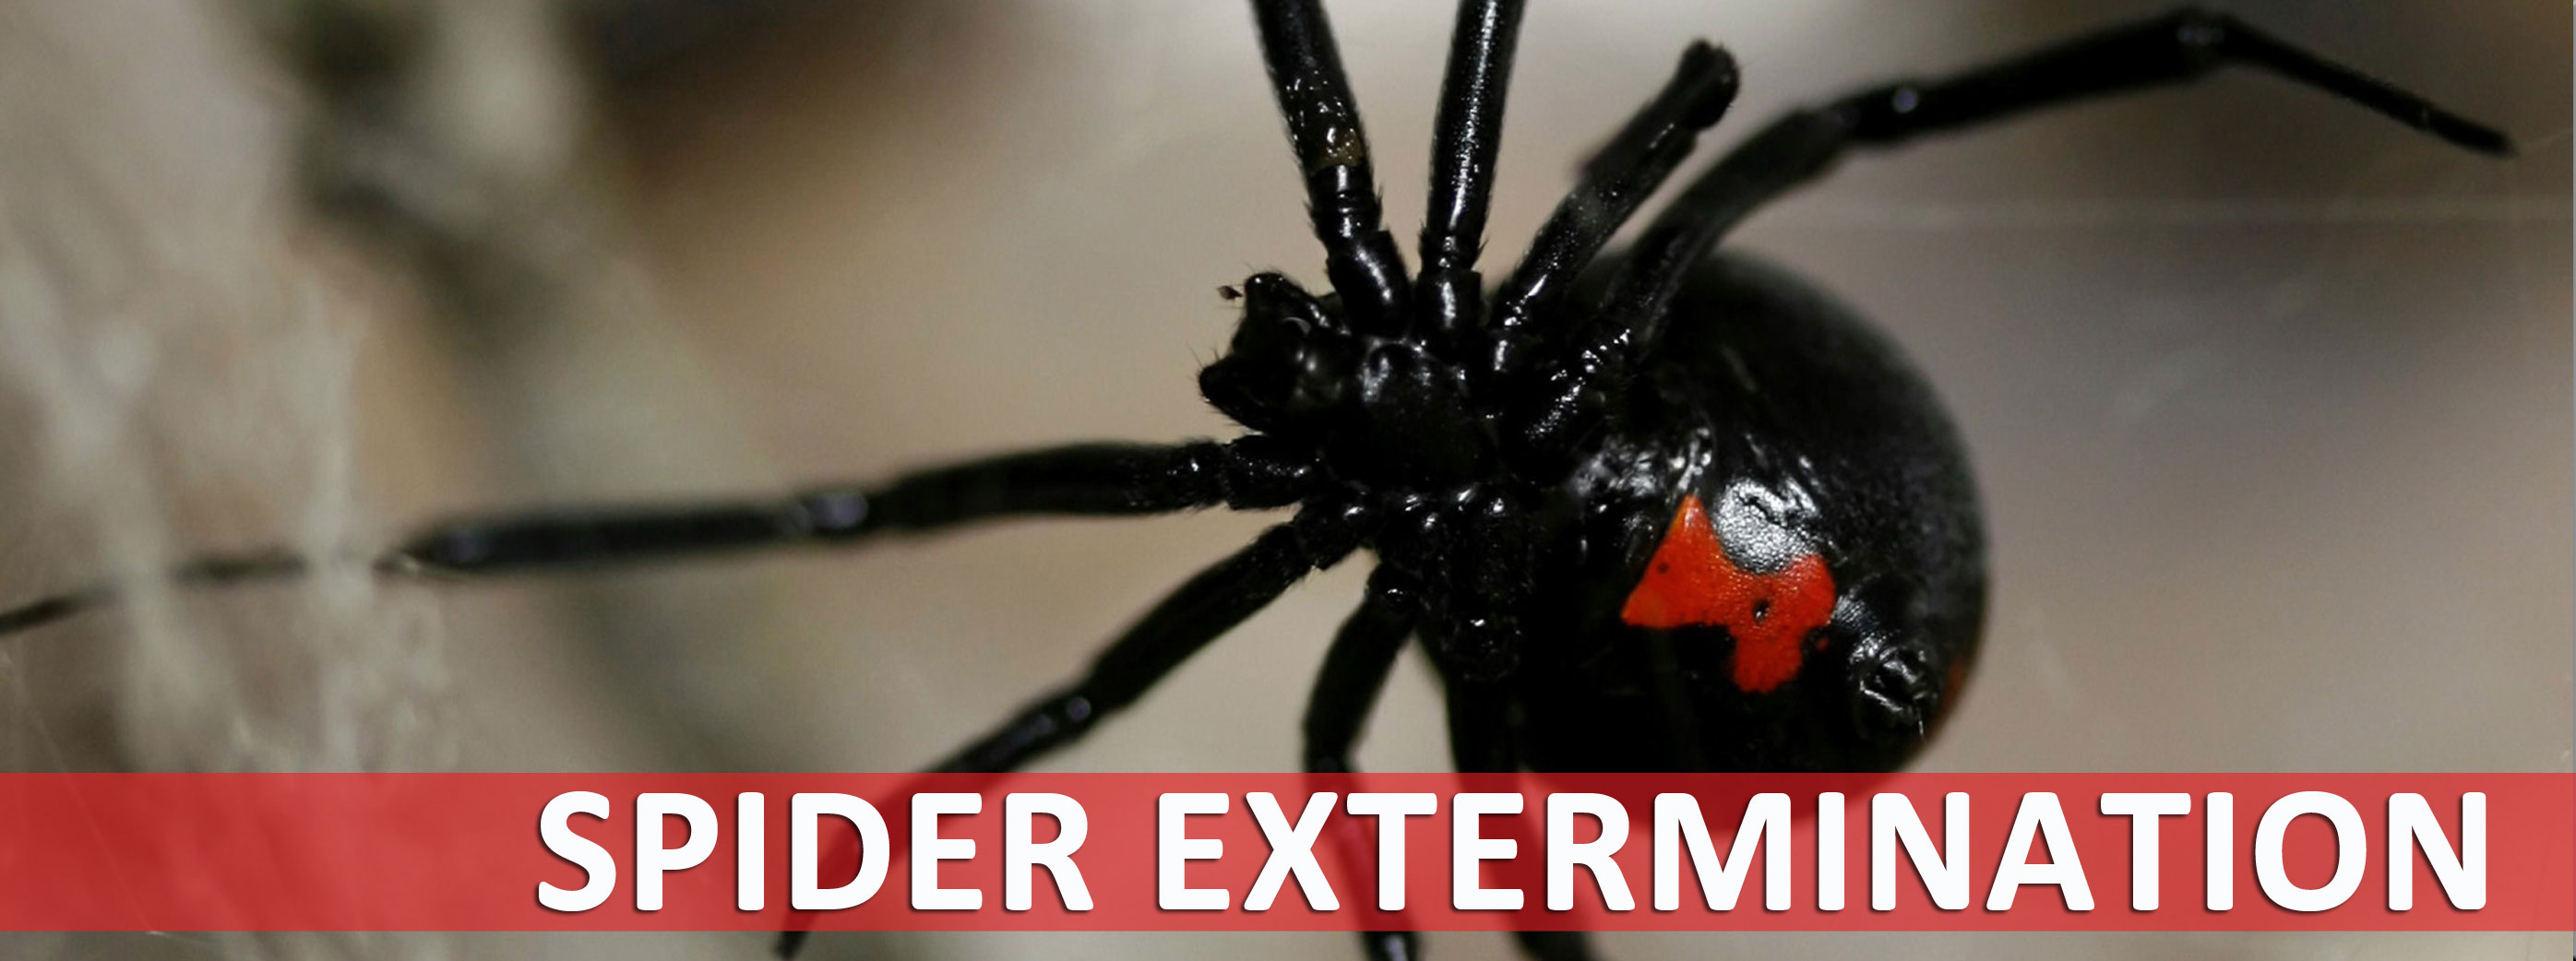 Exterminate Spiders Houston Spider Control